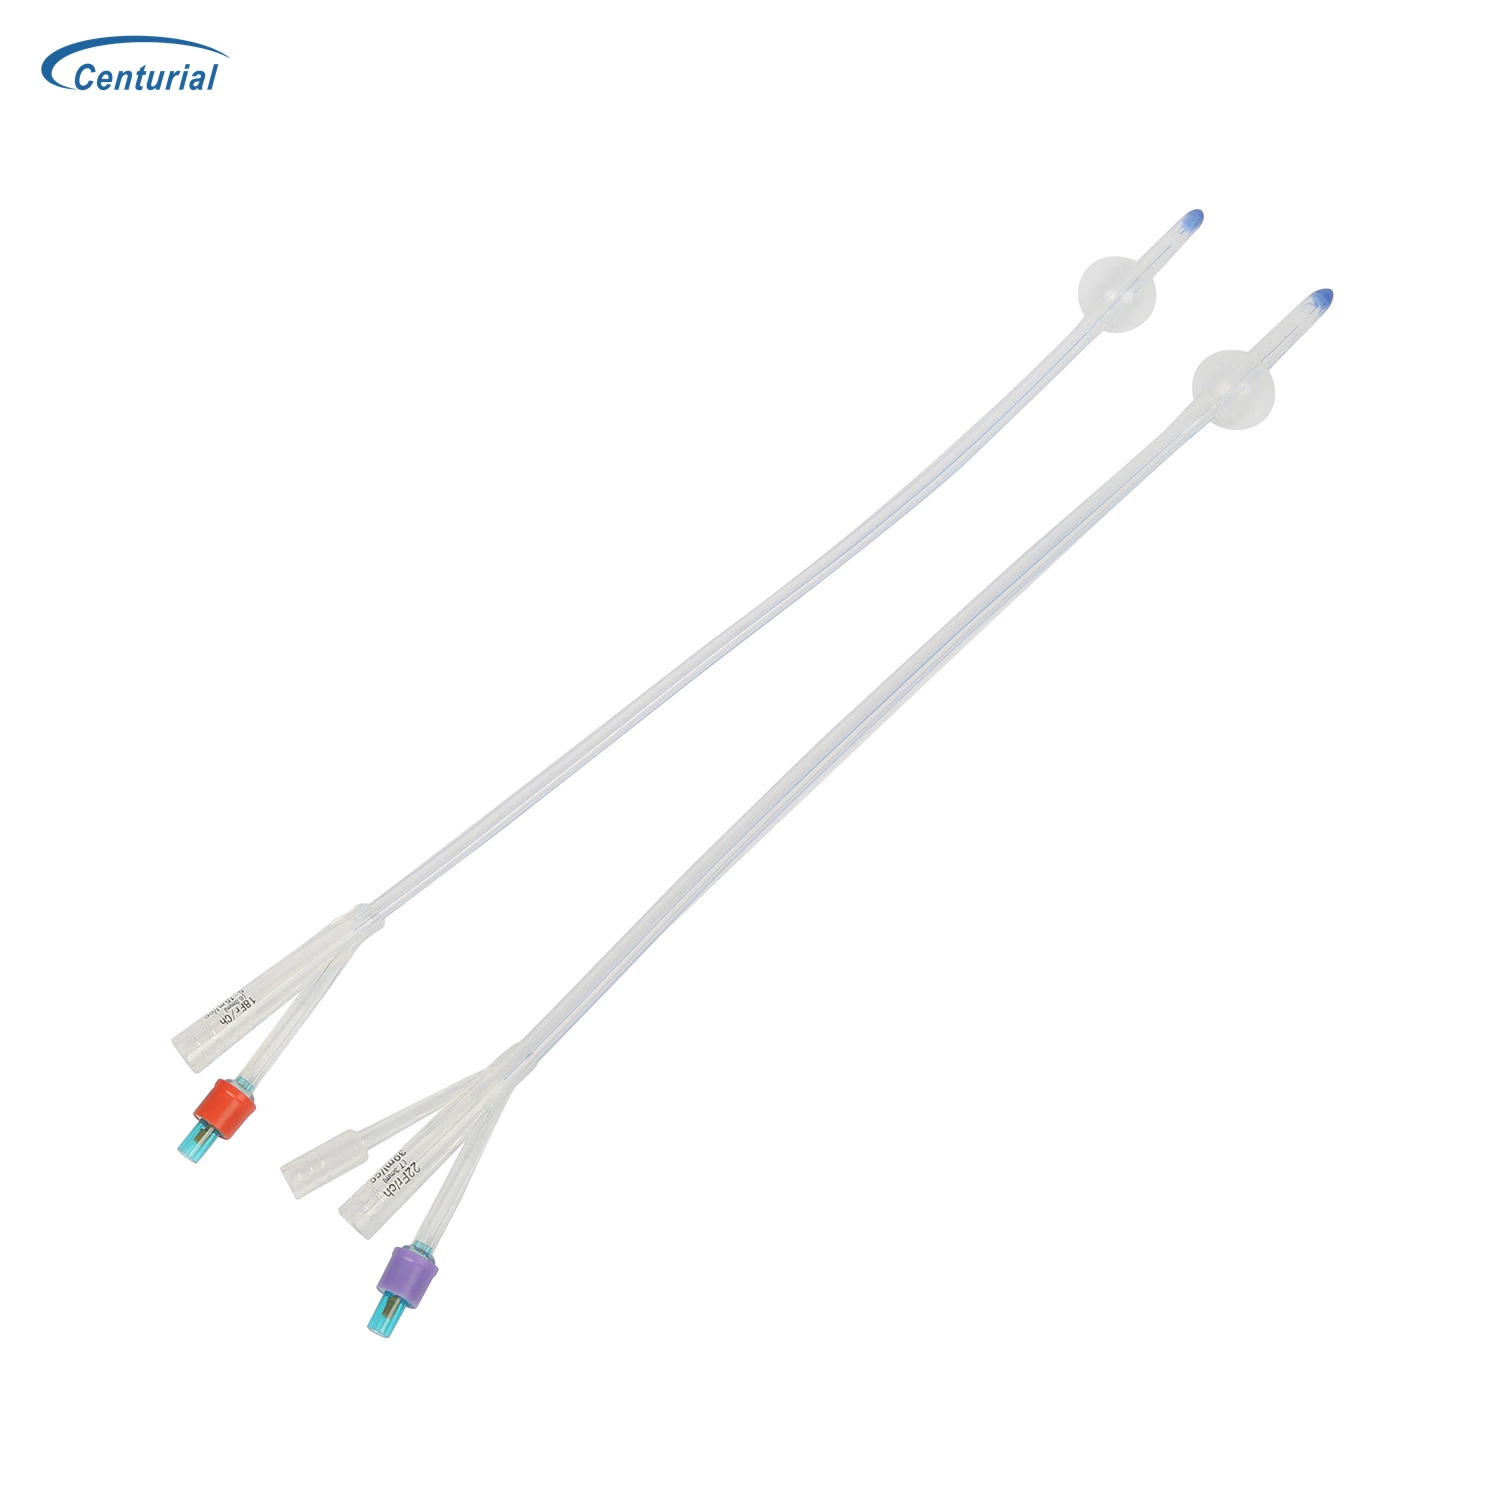 Buy All Silicone Foley Catheter 2 Way 3 Way